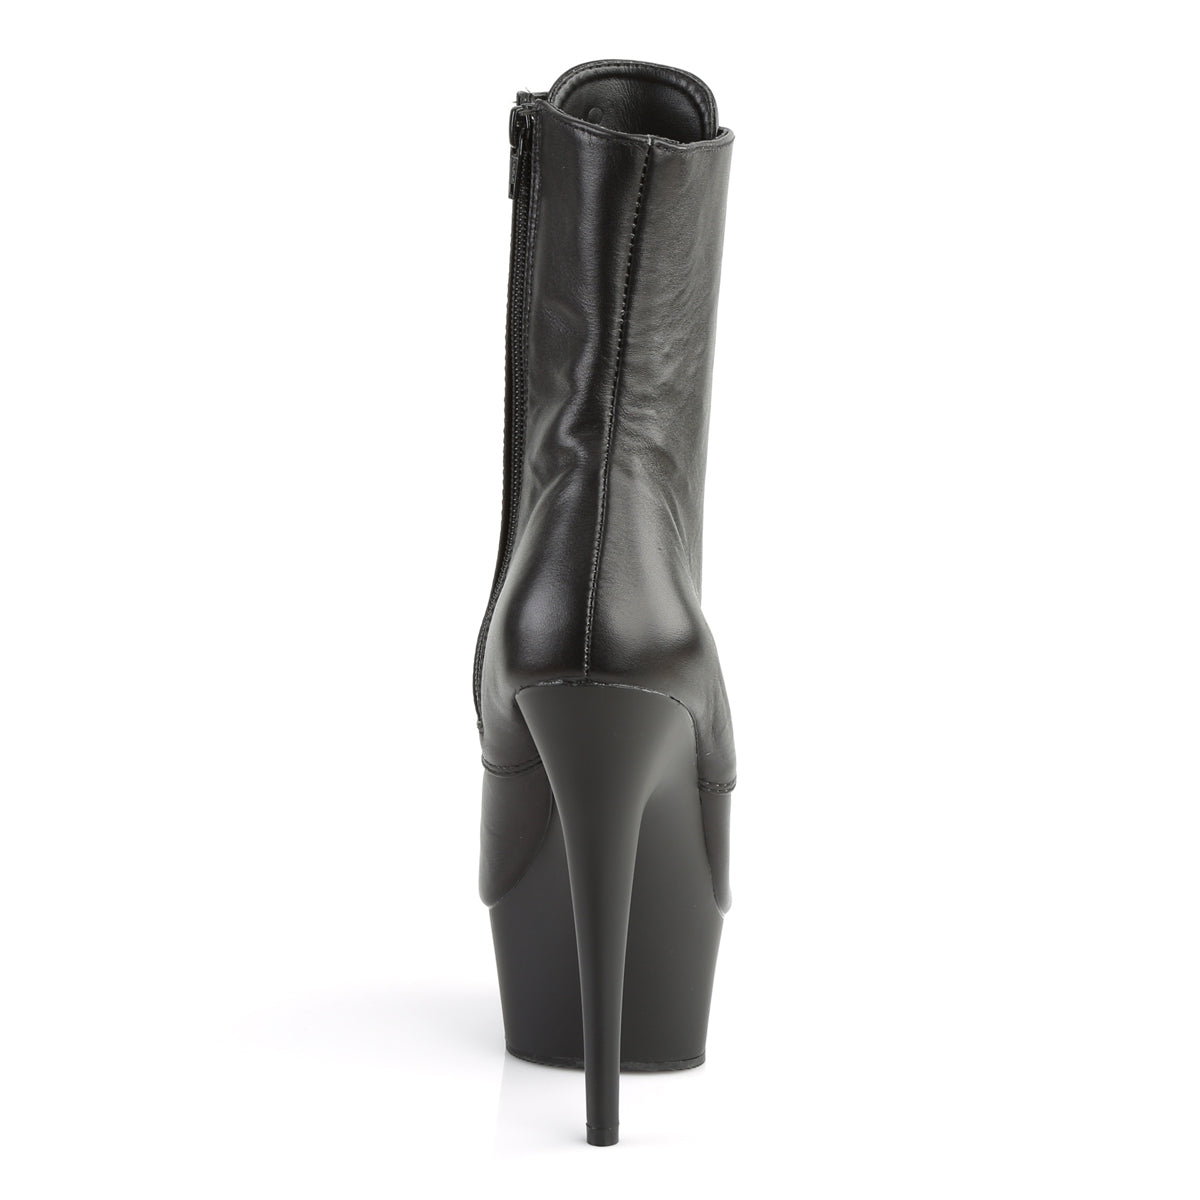 DELIGHT-1020 6" Heel Black Leather Pole Dancing Platforms-Pleaser- Sexy Shoes Fetish Footwear